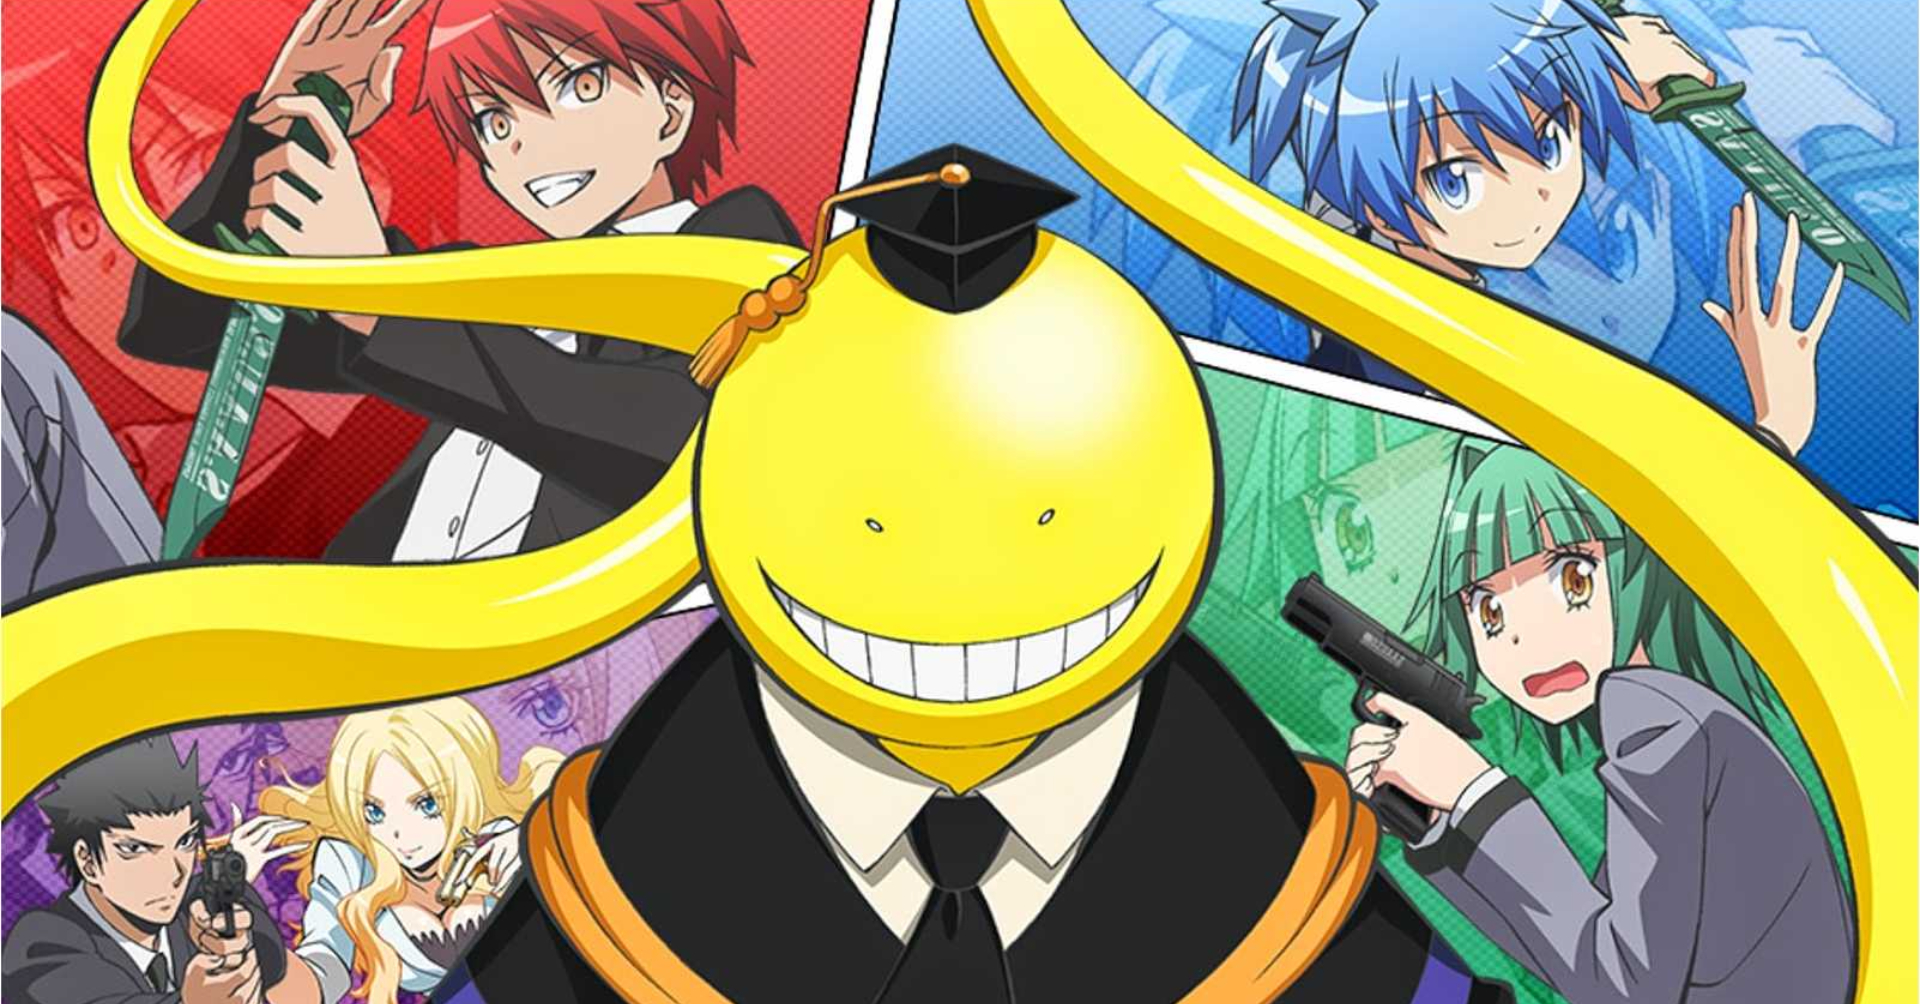 Assassination Classroom Author To Begin New Manga - Anime Corner